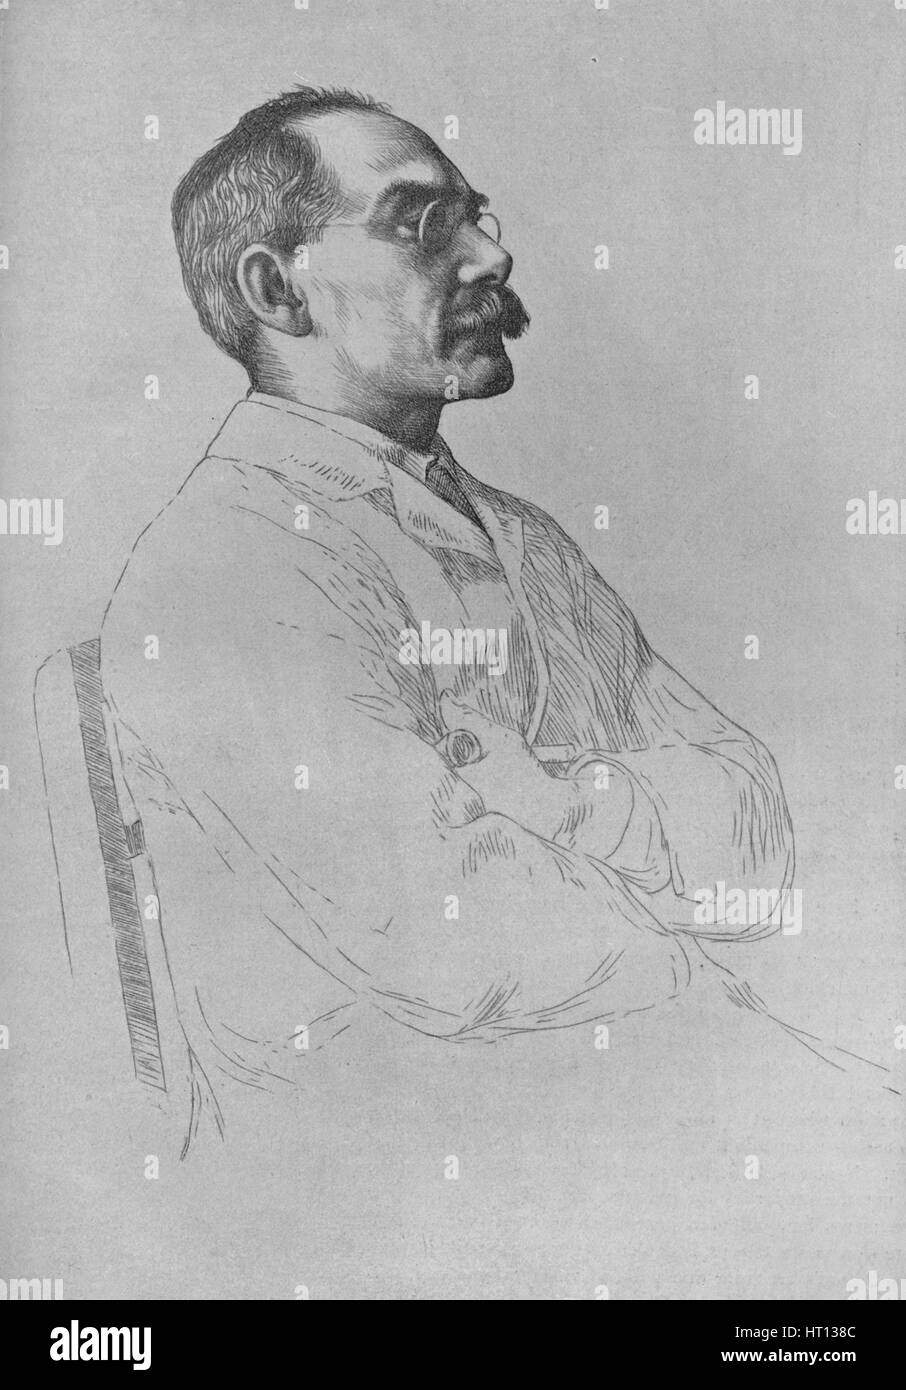 Rudyard Kipling If Fotos e Imágenes de stock - Alamy